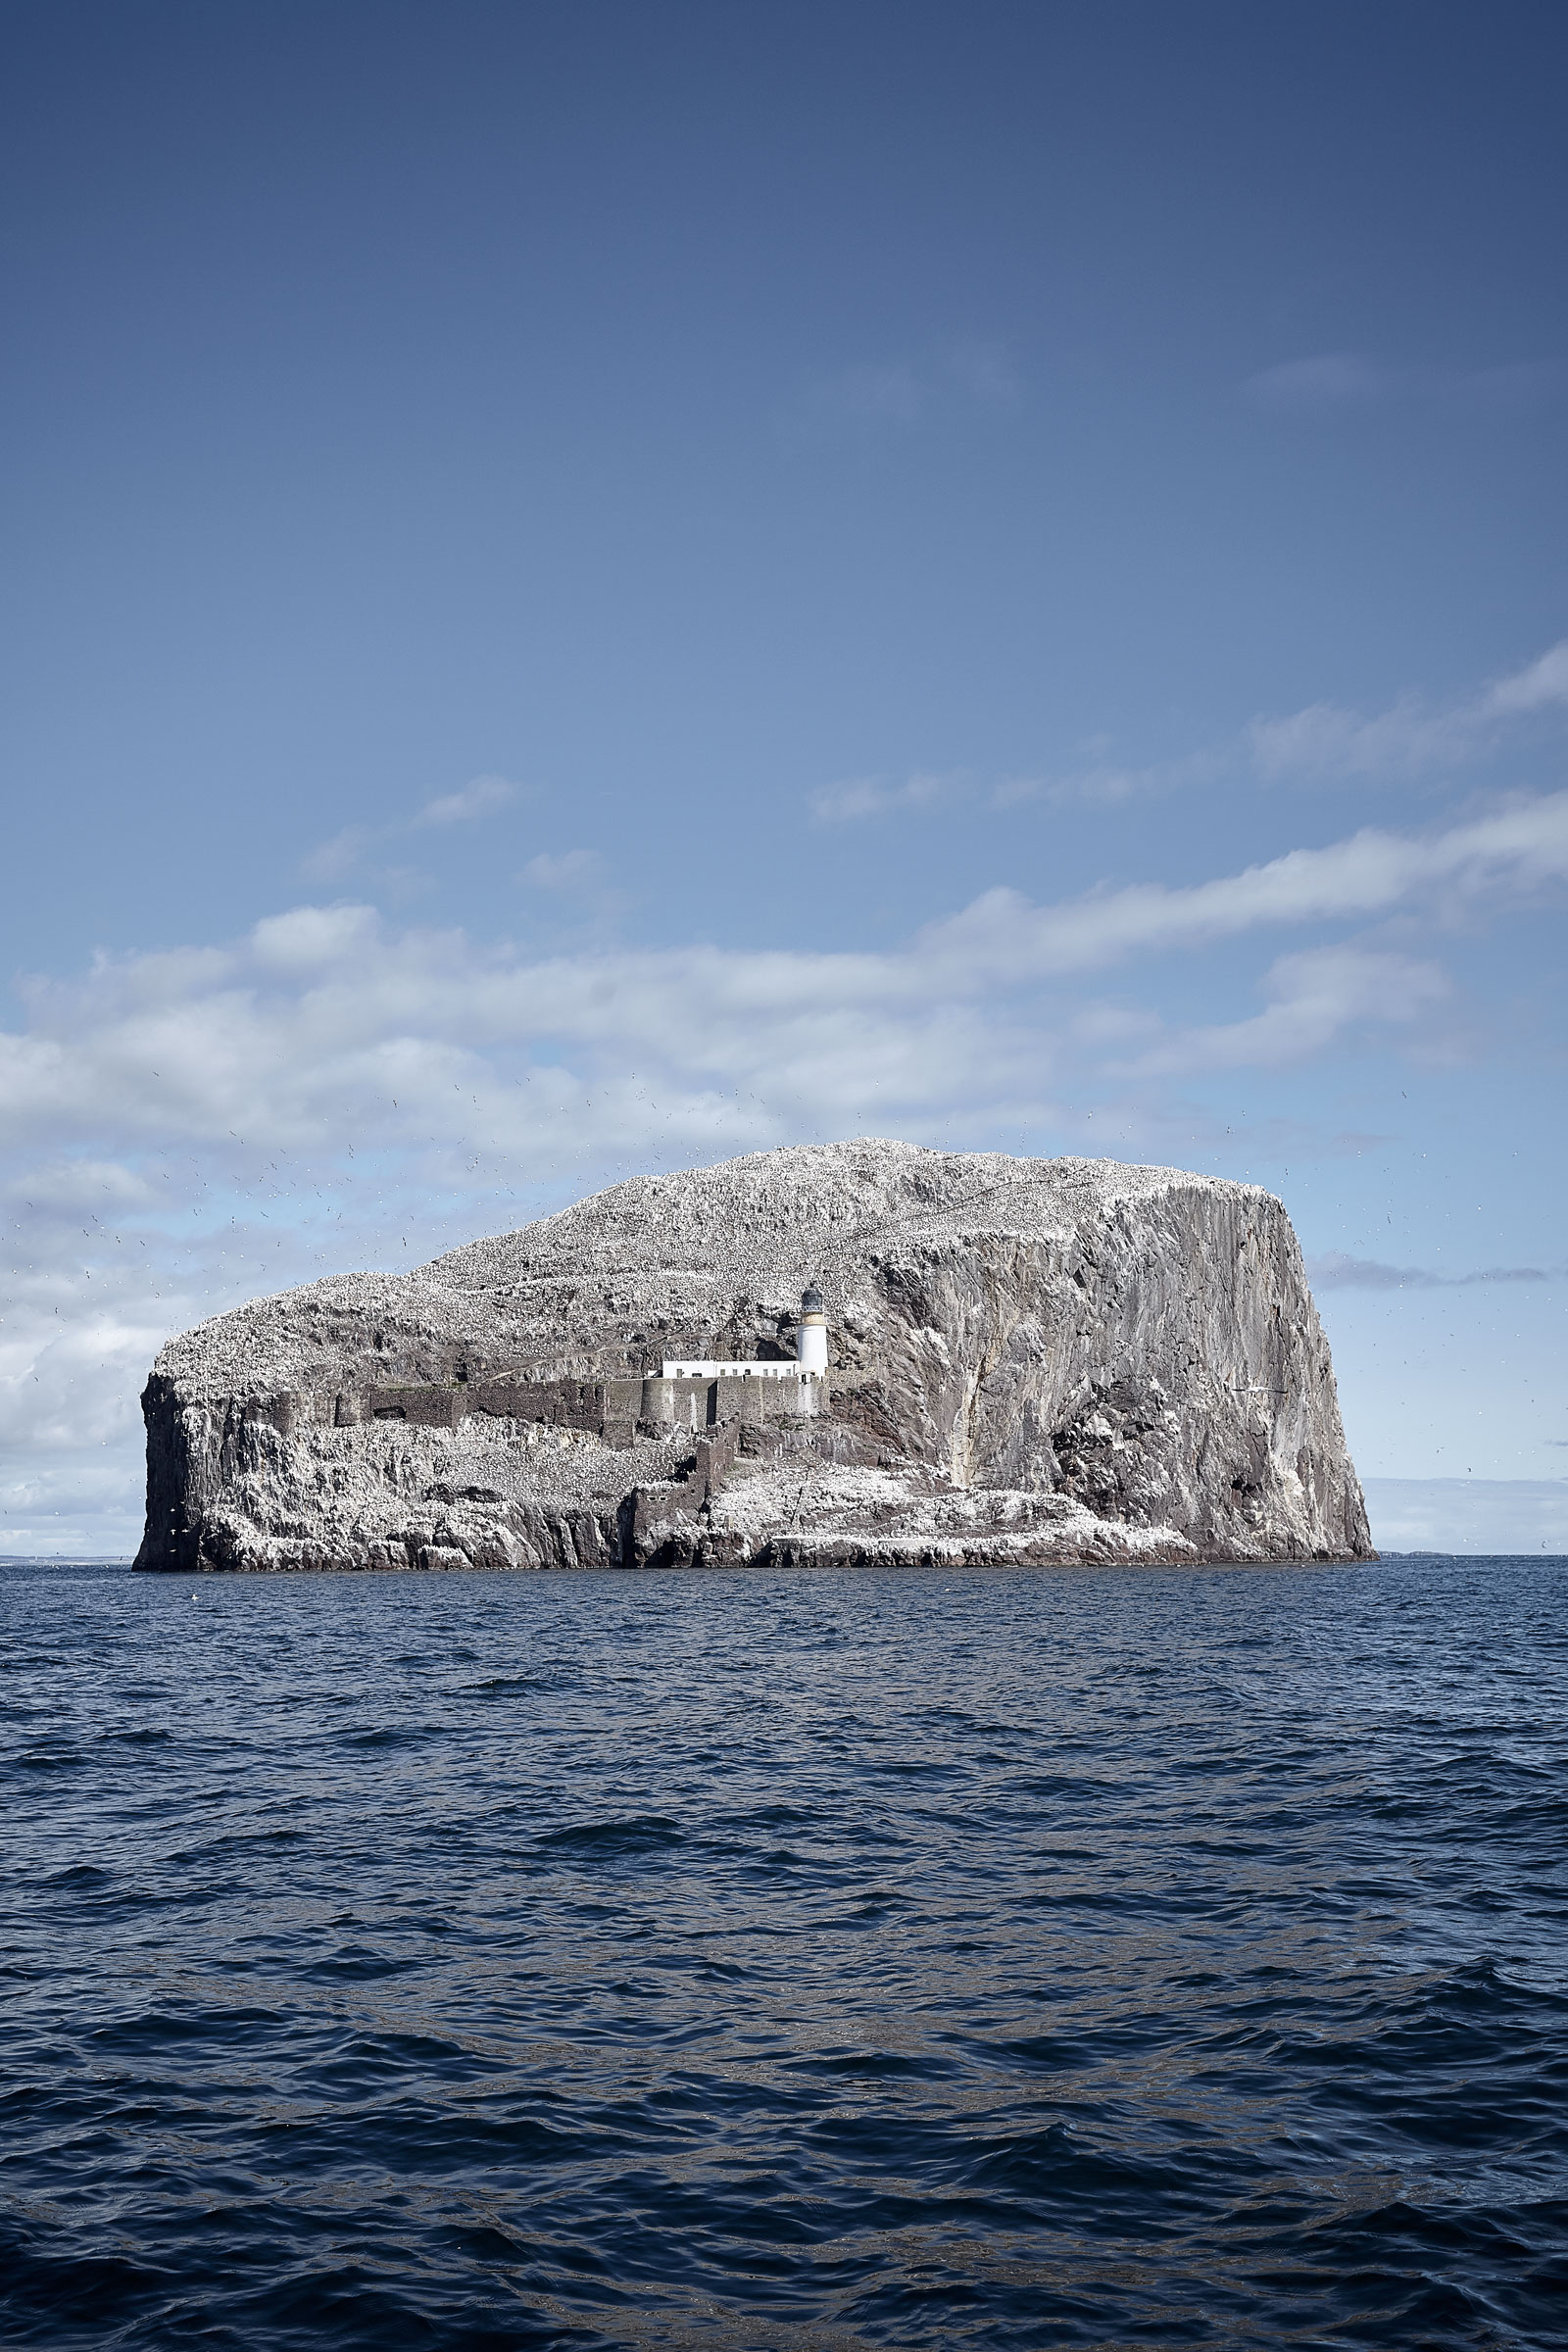 Bass Rock from the sea, Edinburgh travel and hospitality photographer, Alastair Ferrier.